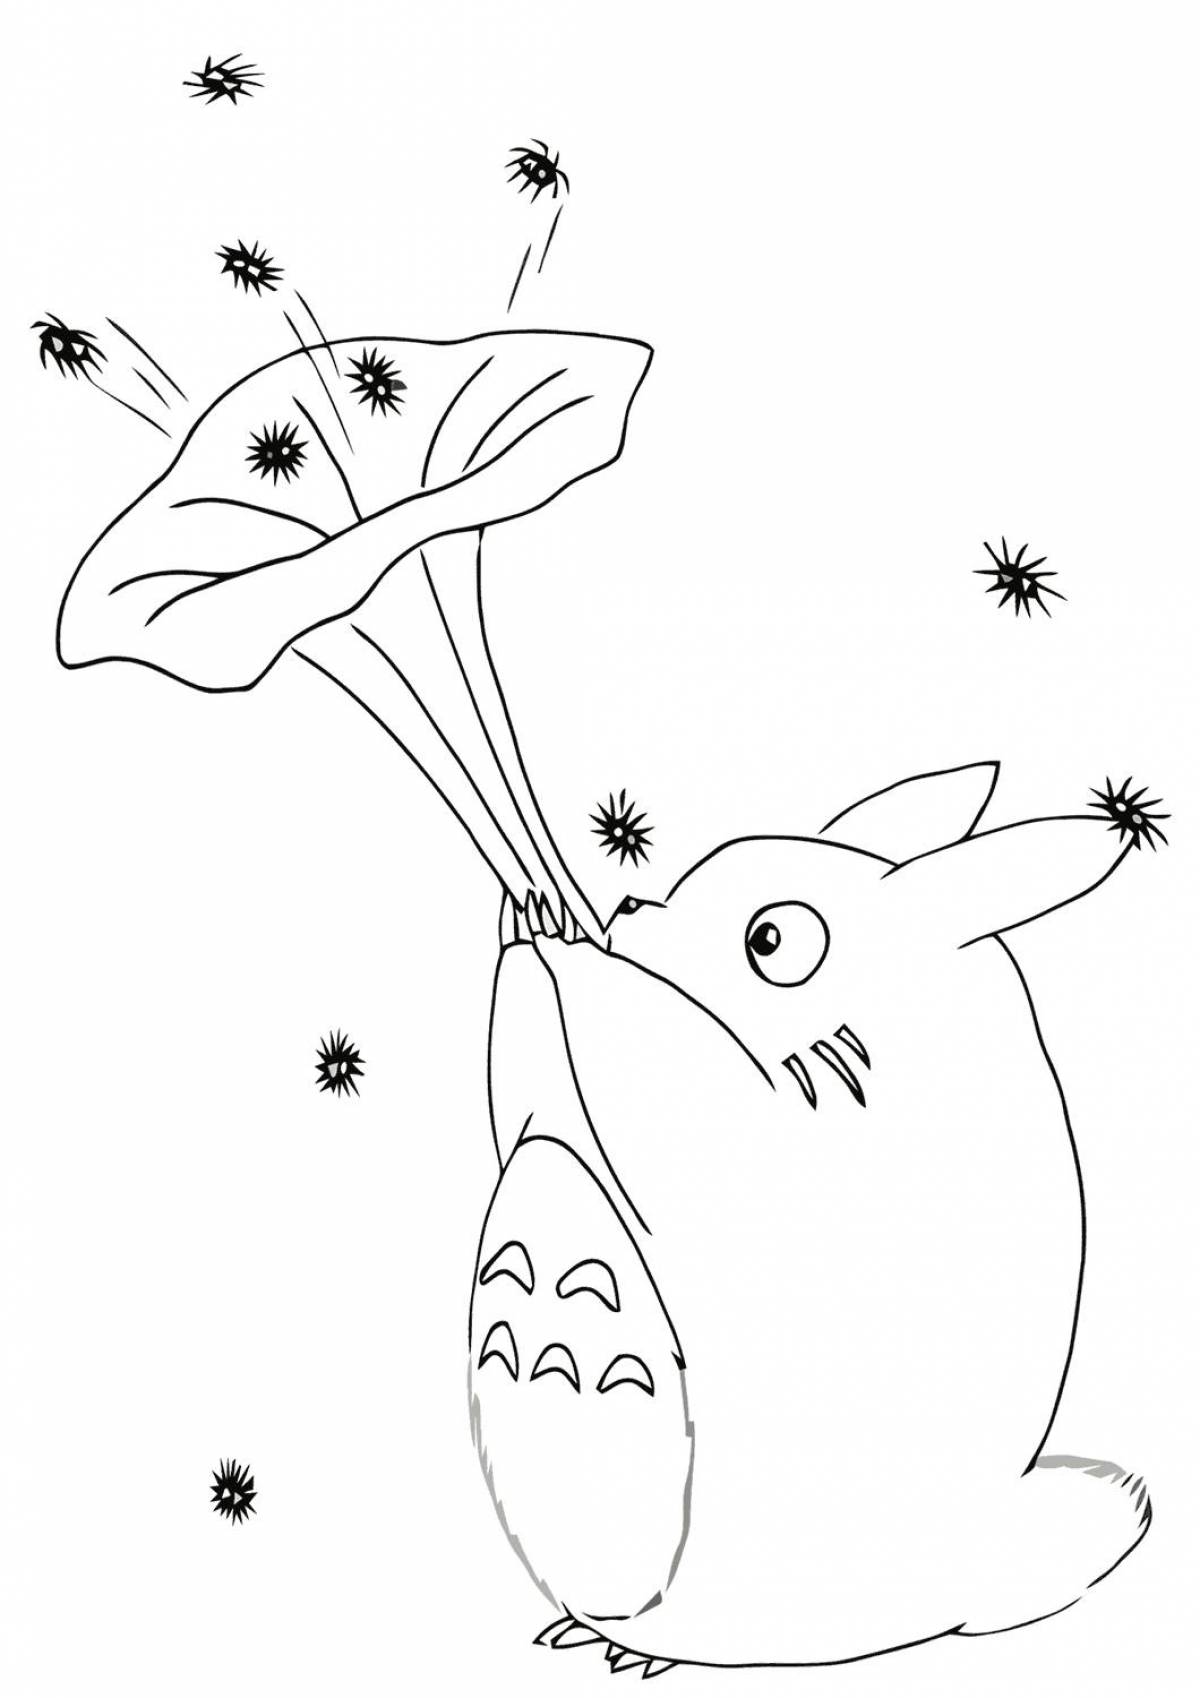 Rampant Totoro coloring page